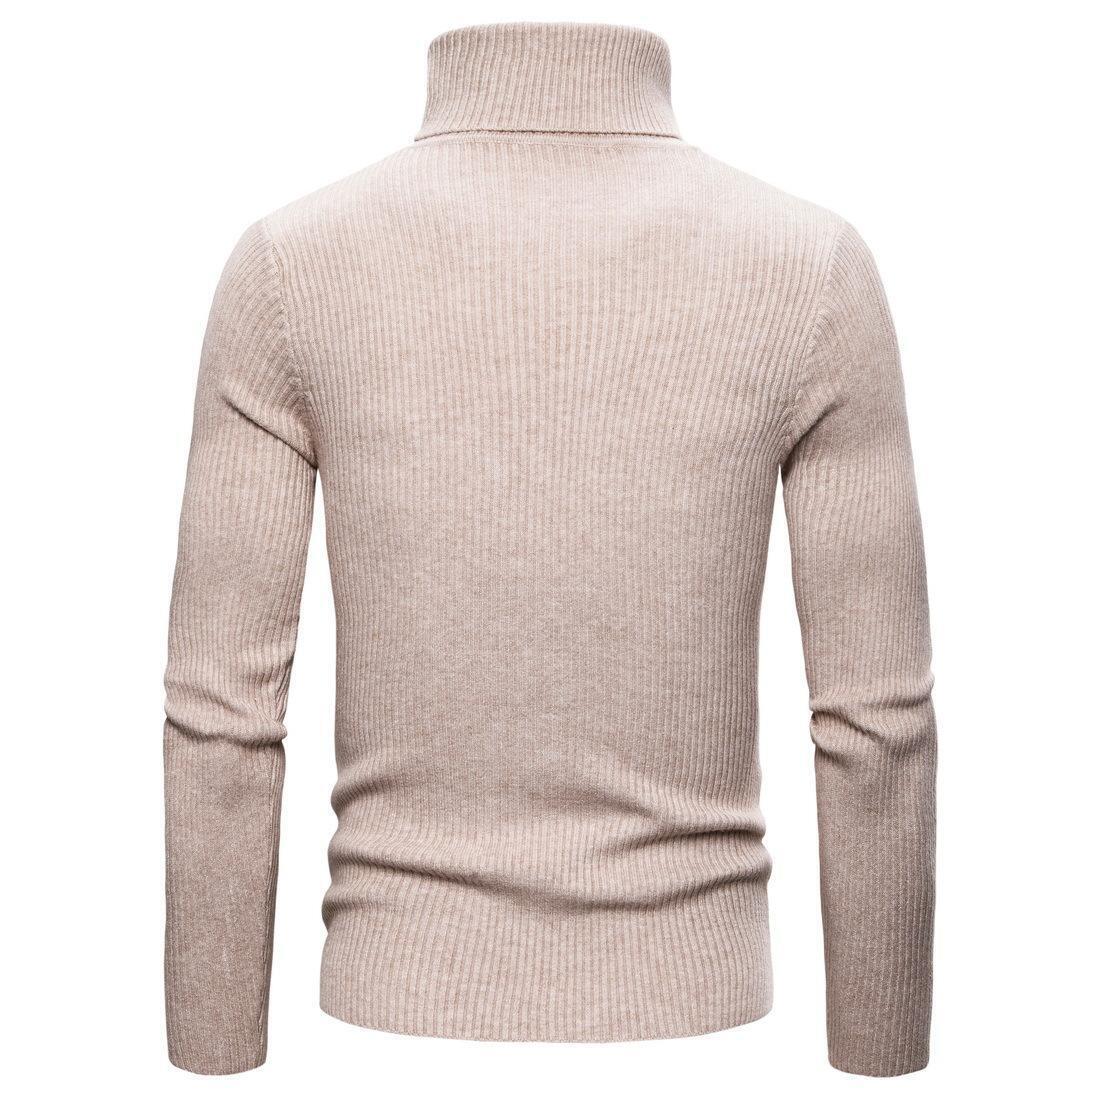 Mens Sweater Jumper Knitted Turtleneck High Collar Size M-3XL